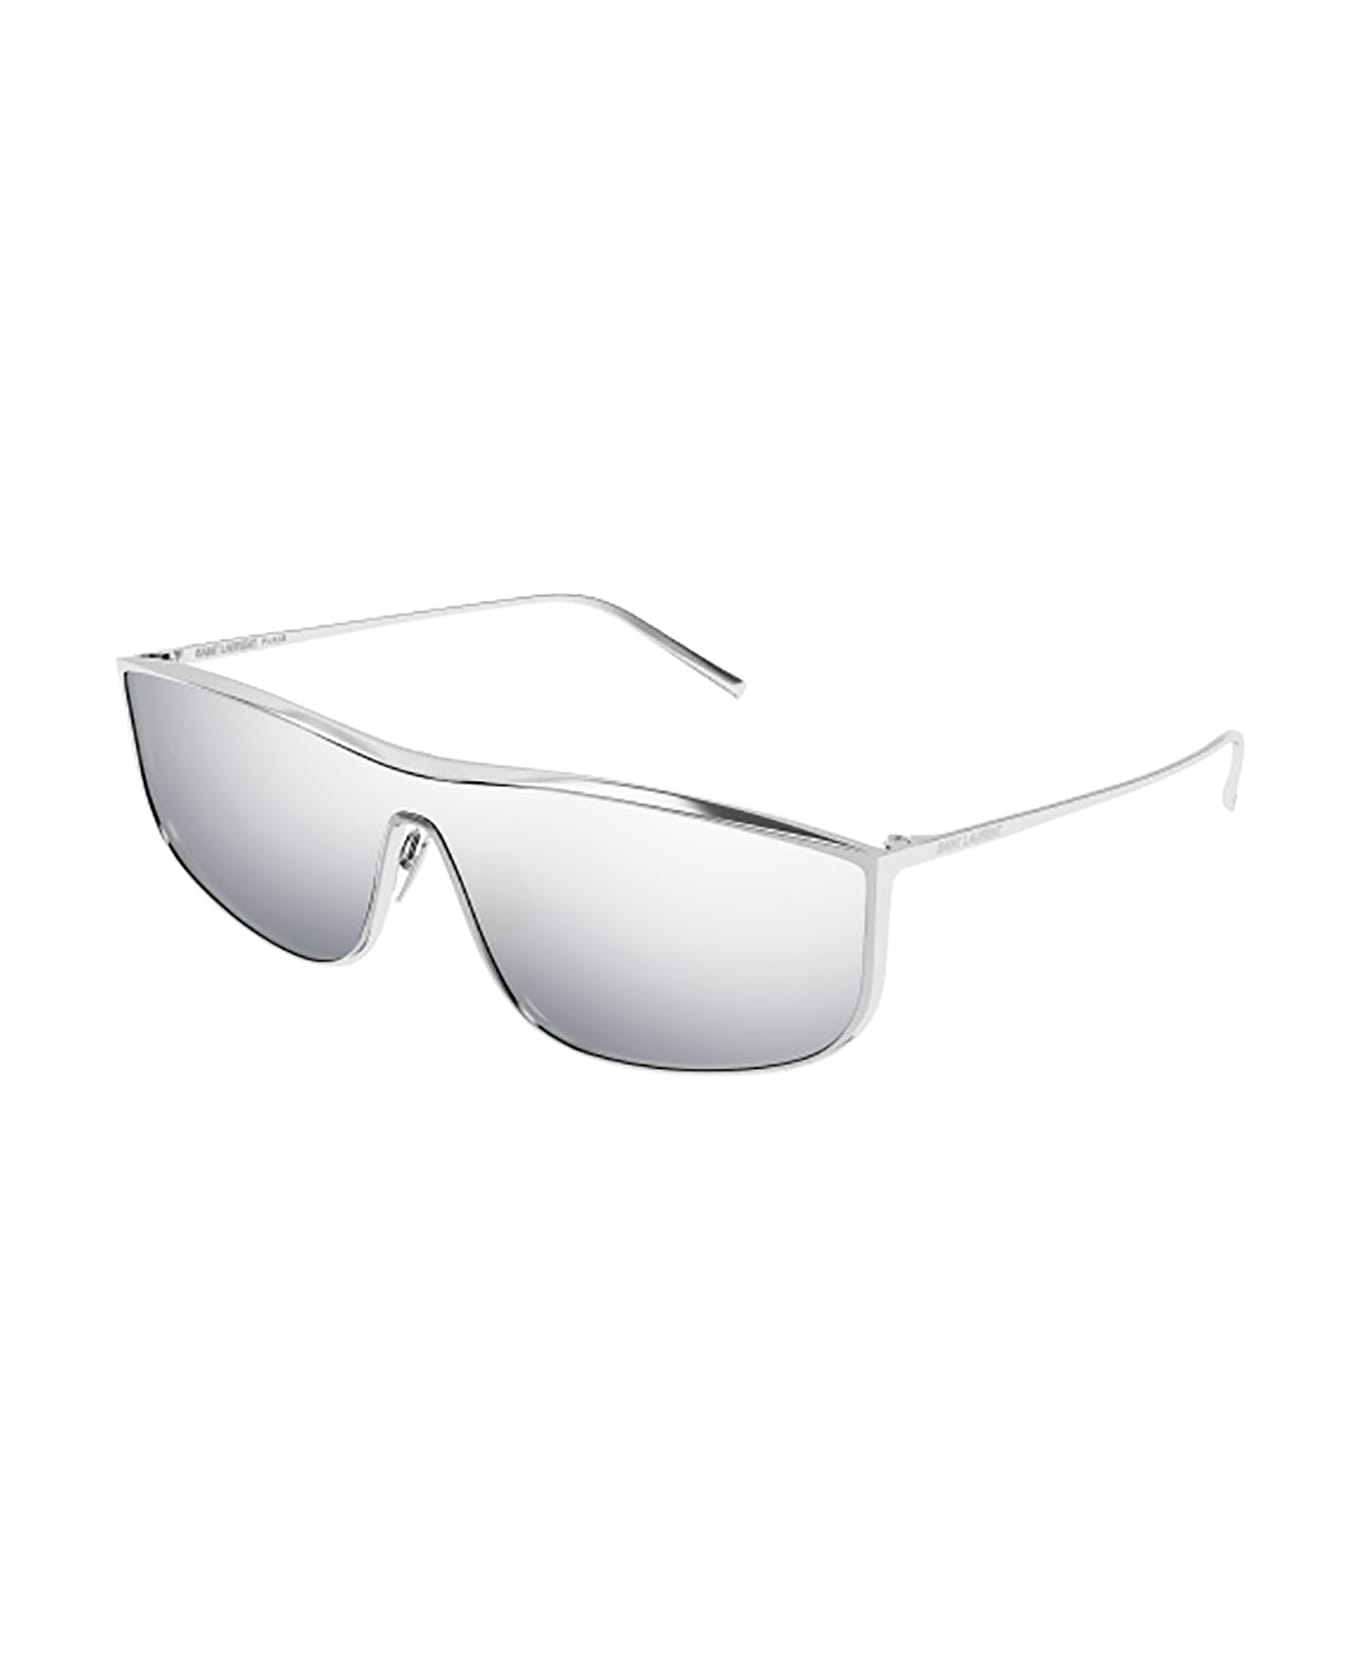 Saint Laurent Eyewear SL 605 LUNA Sunglasses - Silver Silver Silver